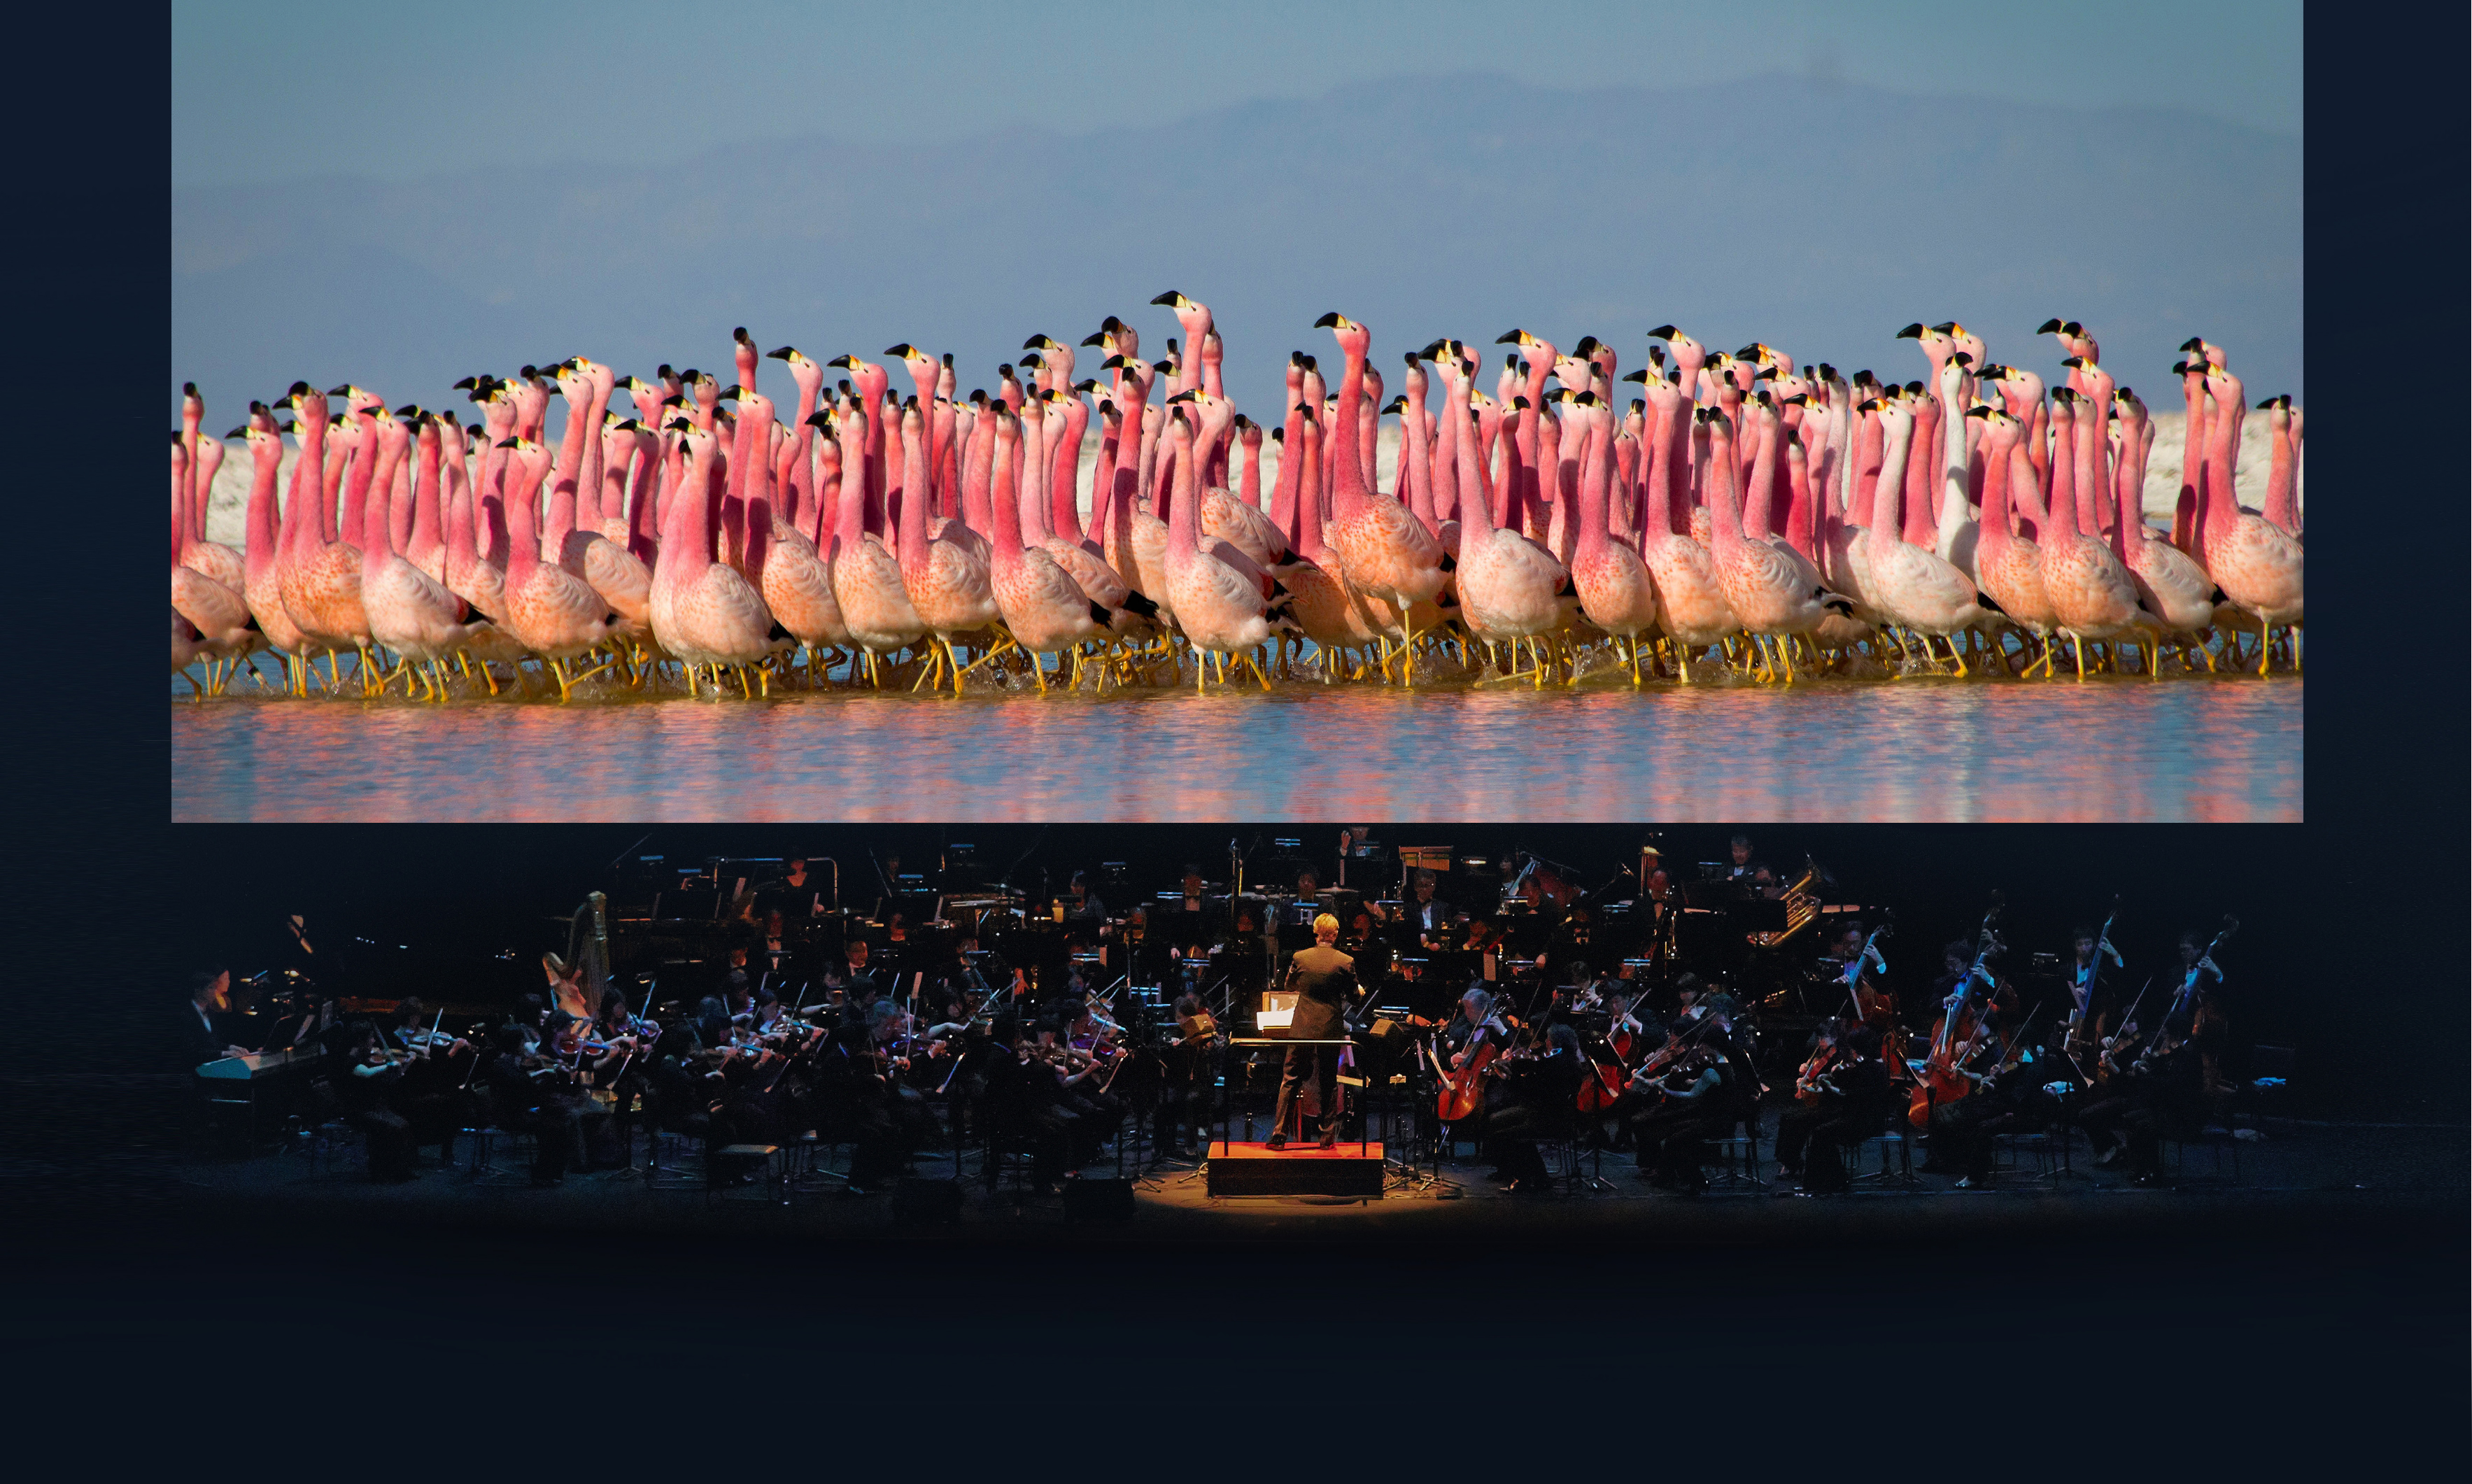 planet-erde-live-concert-orchestra-photo-takayuki-shimizu-image-flamingos-justin-anderson-copyright.jpeg